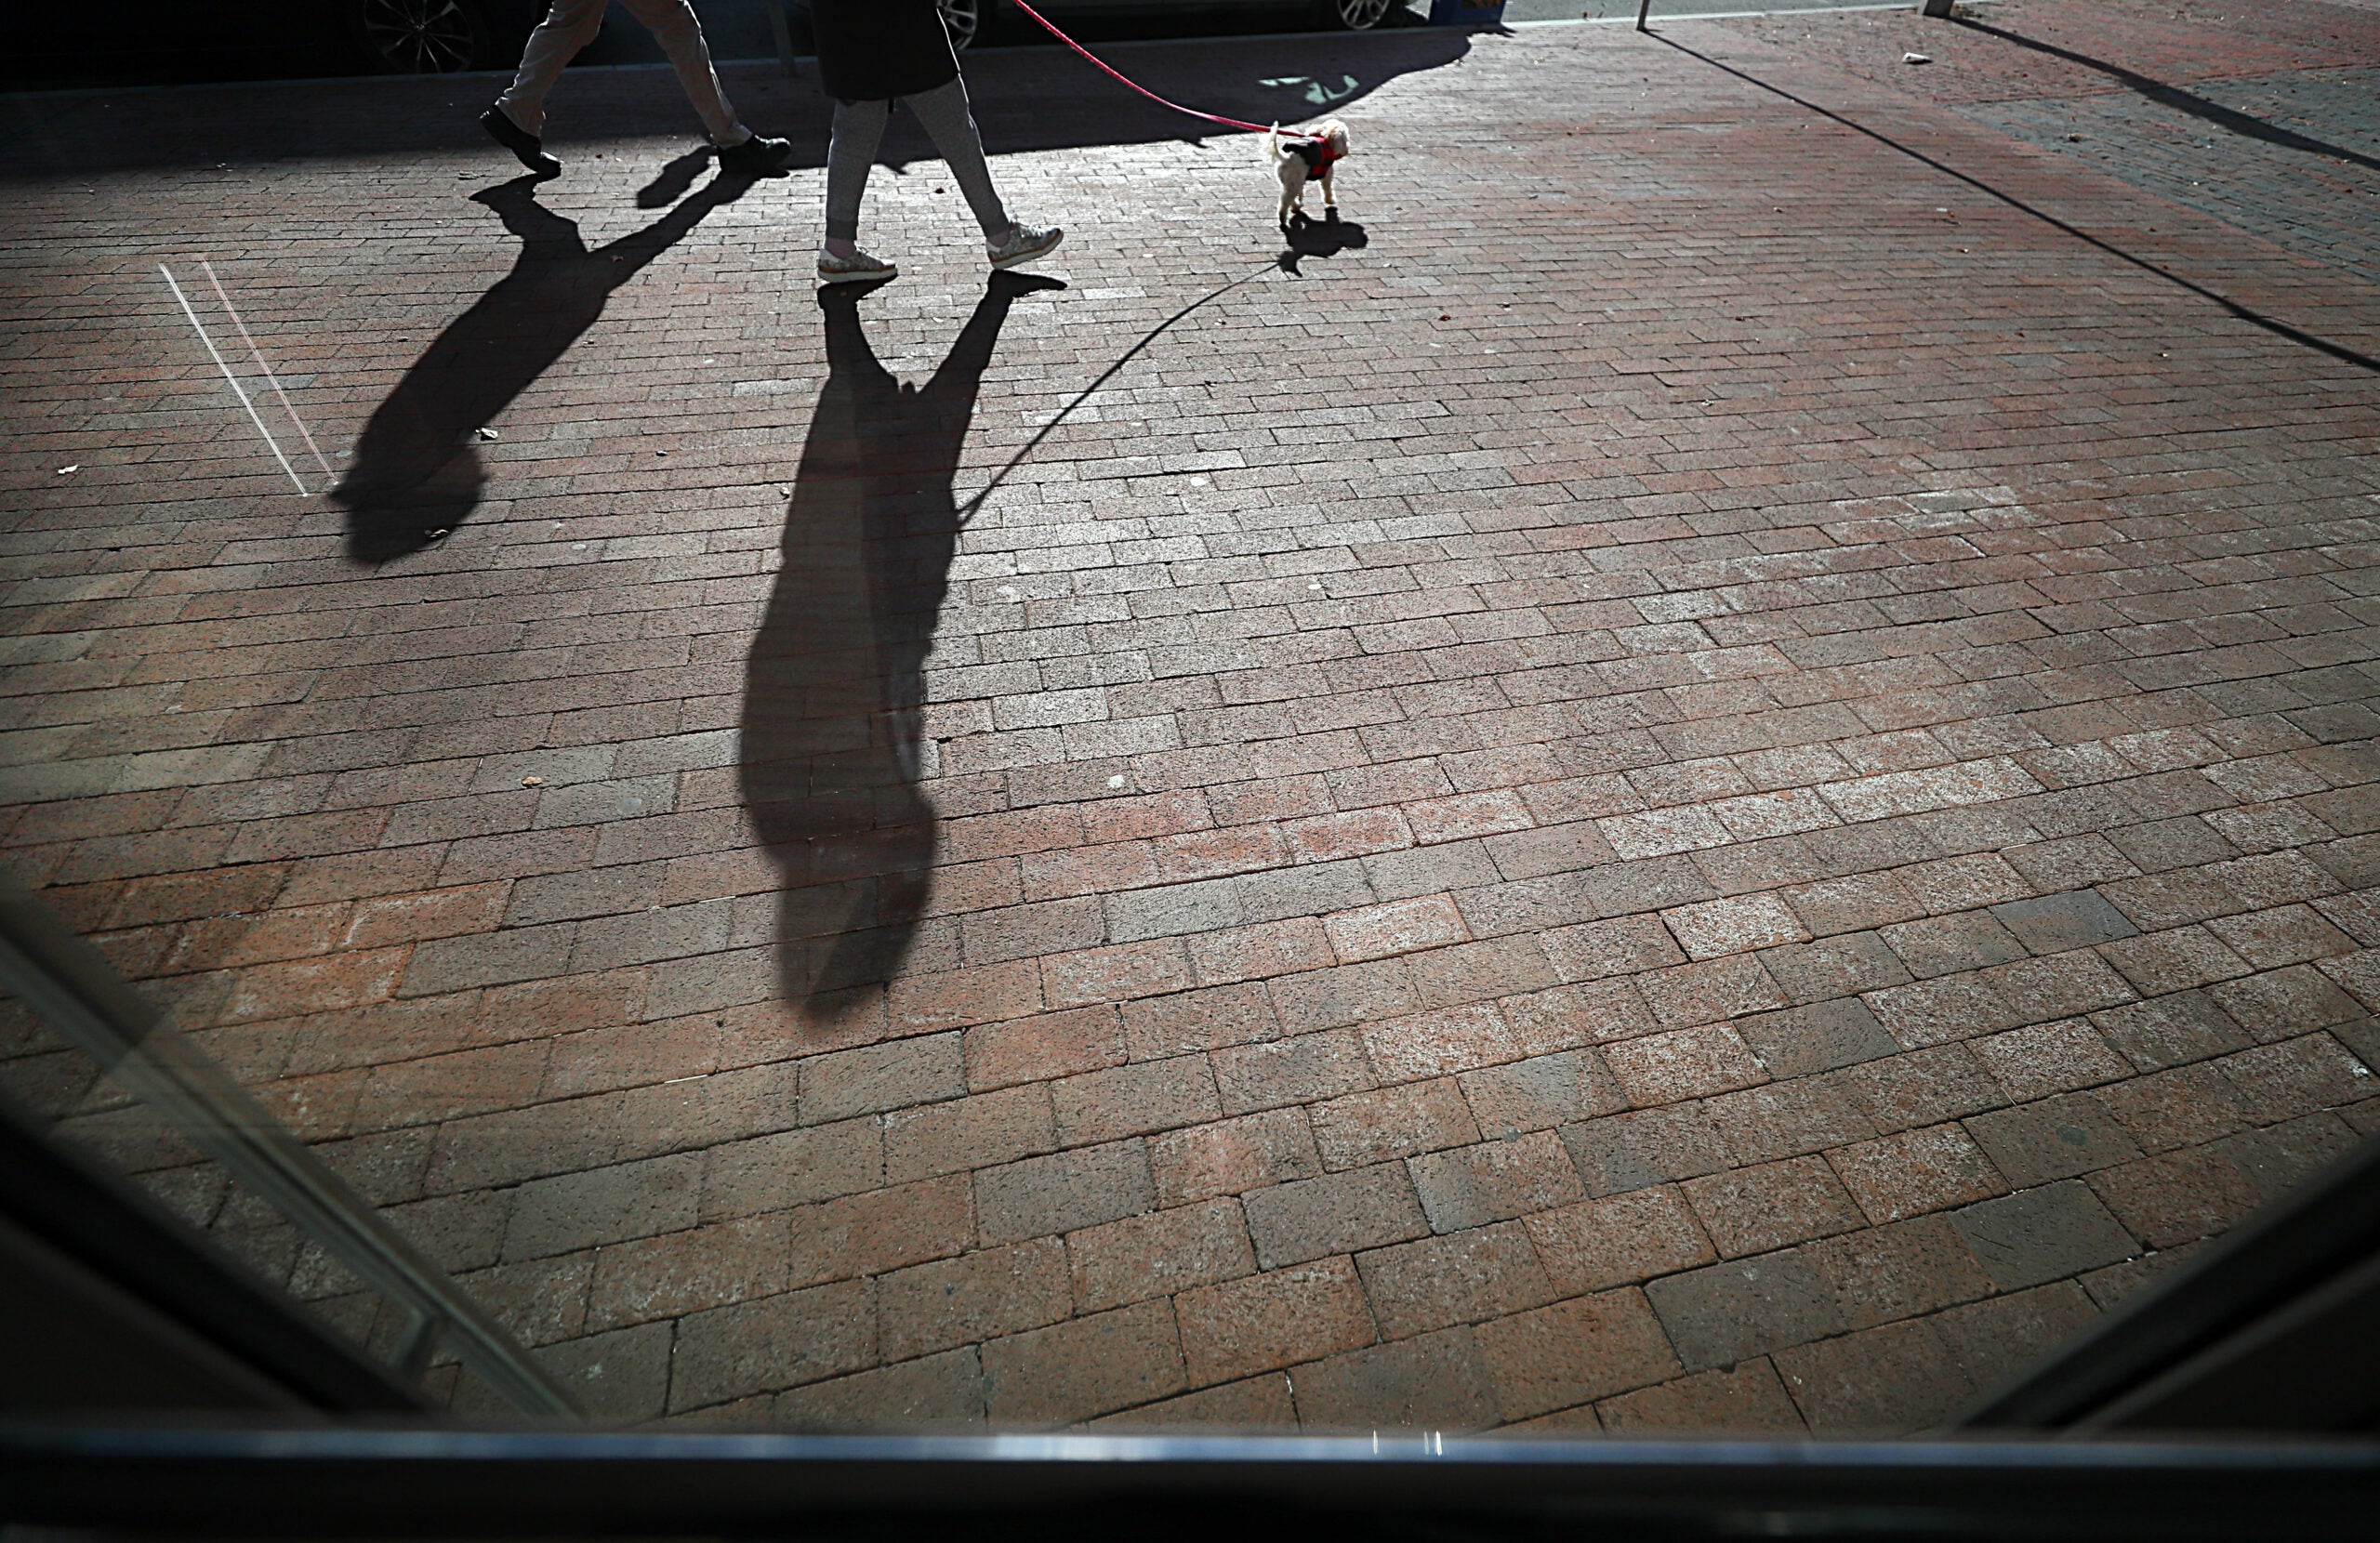 Pedestrians walking on Tremont Street cast long shadows on the brick sidewalk.